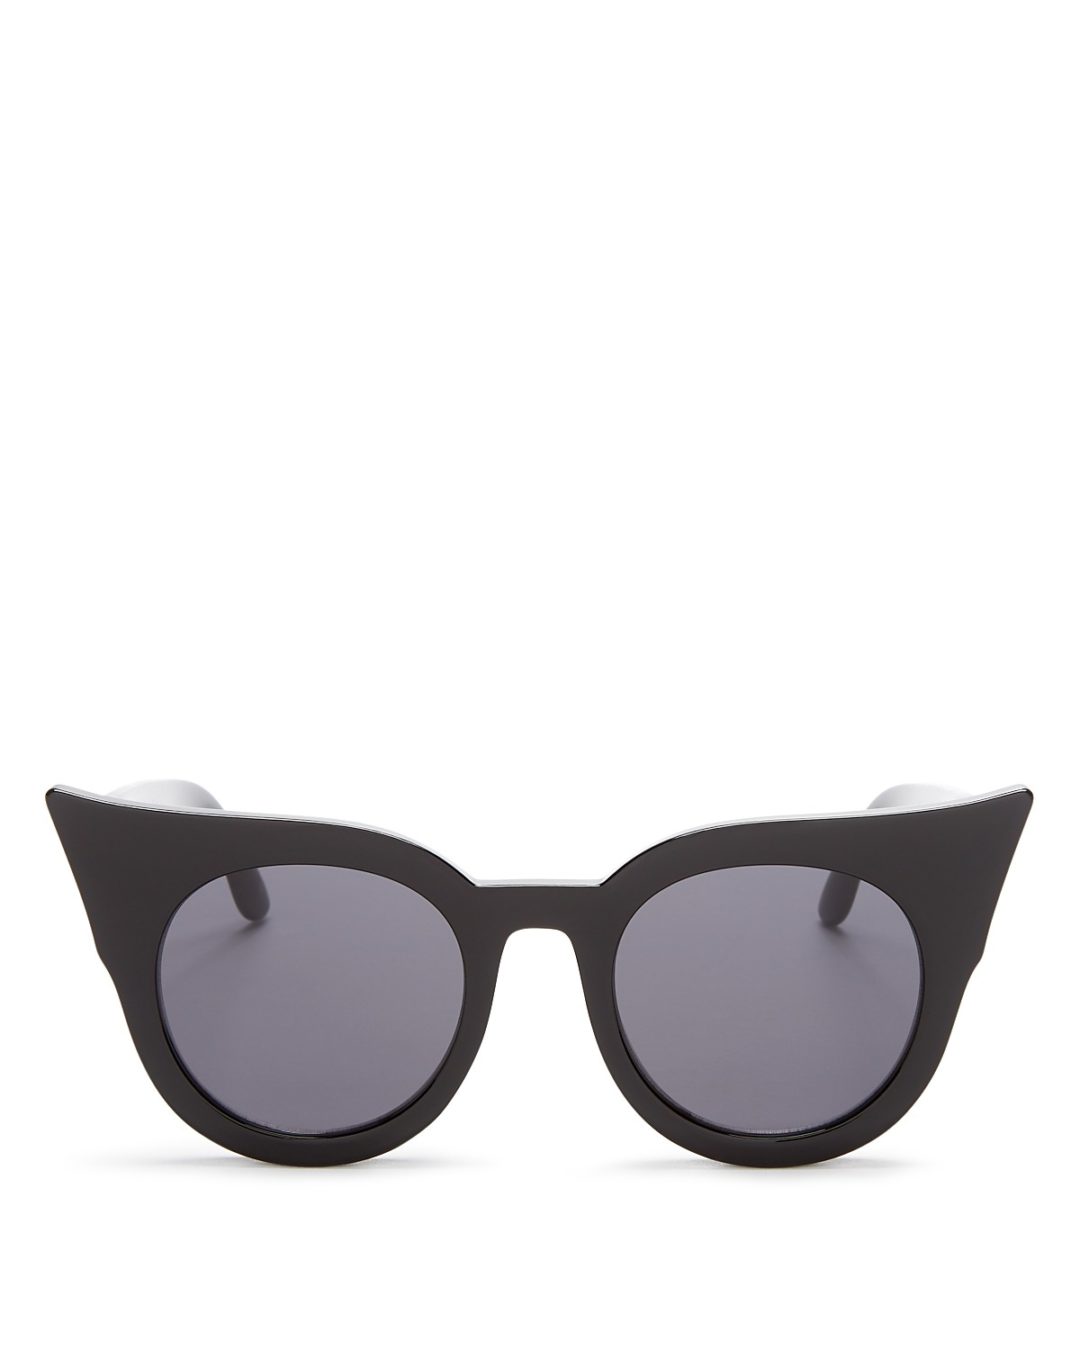 Trends in Sunglasses – Save & Splurge! - Fashion Should Be Fun